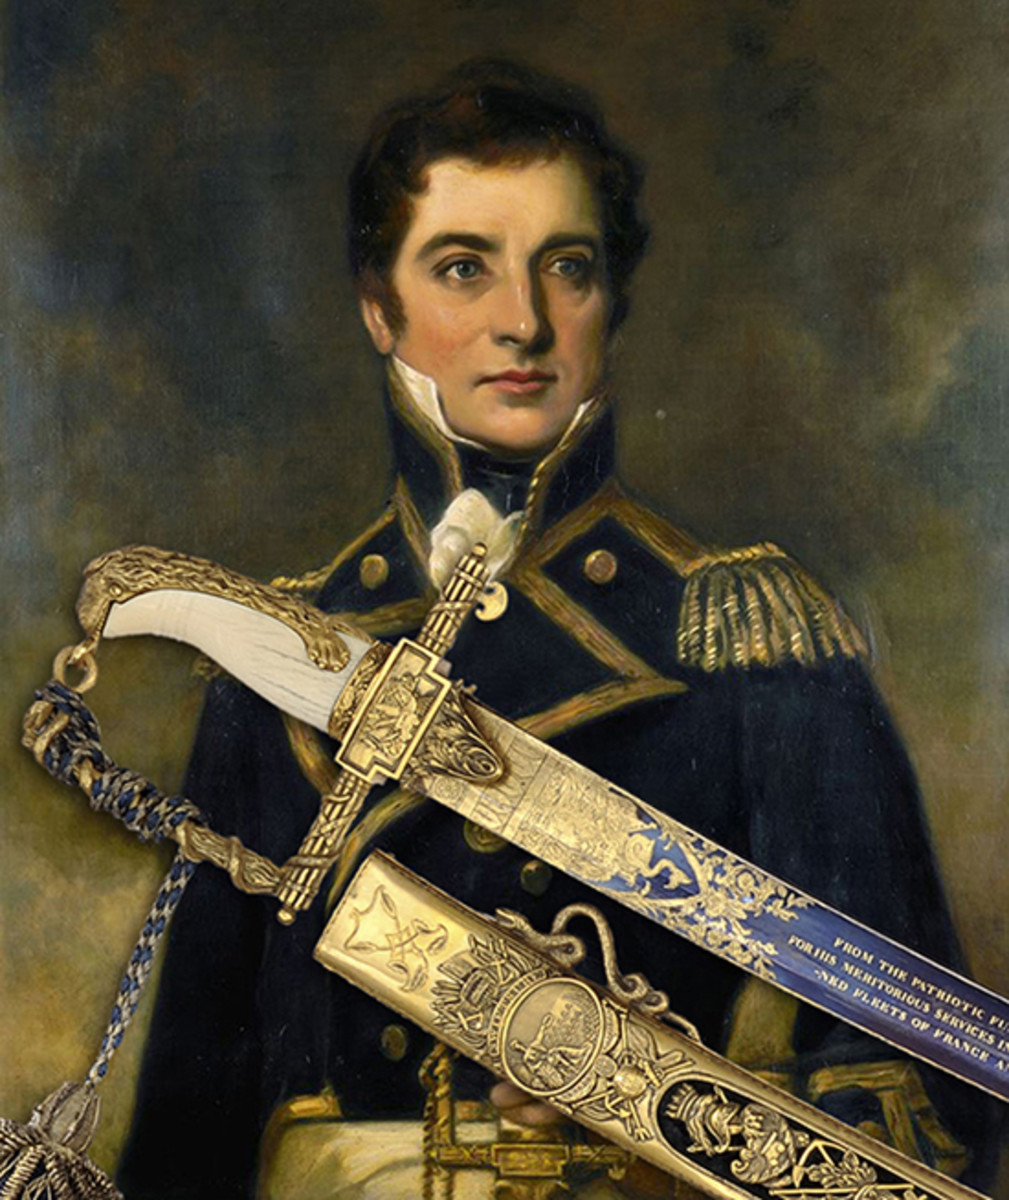 Cased 100 Guinea Lloyd’s Patriotic Presentation Sword for a hero of the Battle of Trafalgar, Capt. William G. Rutherford.